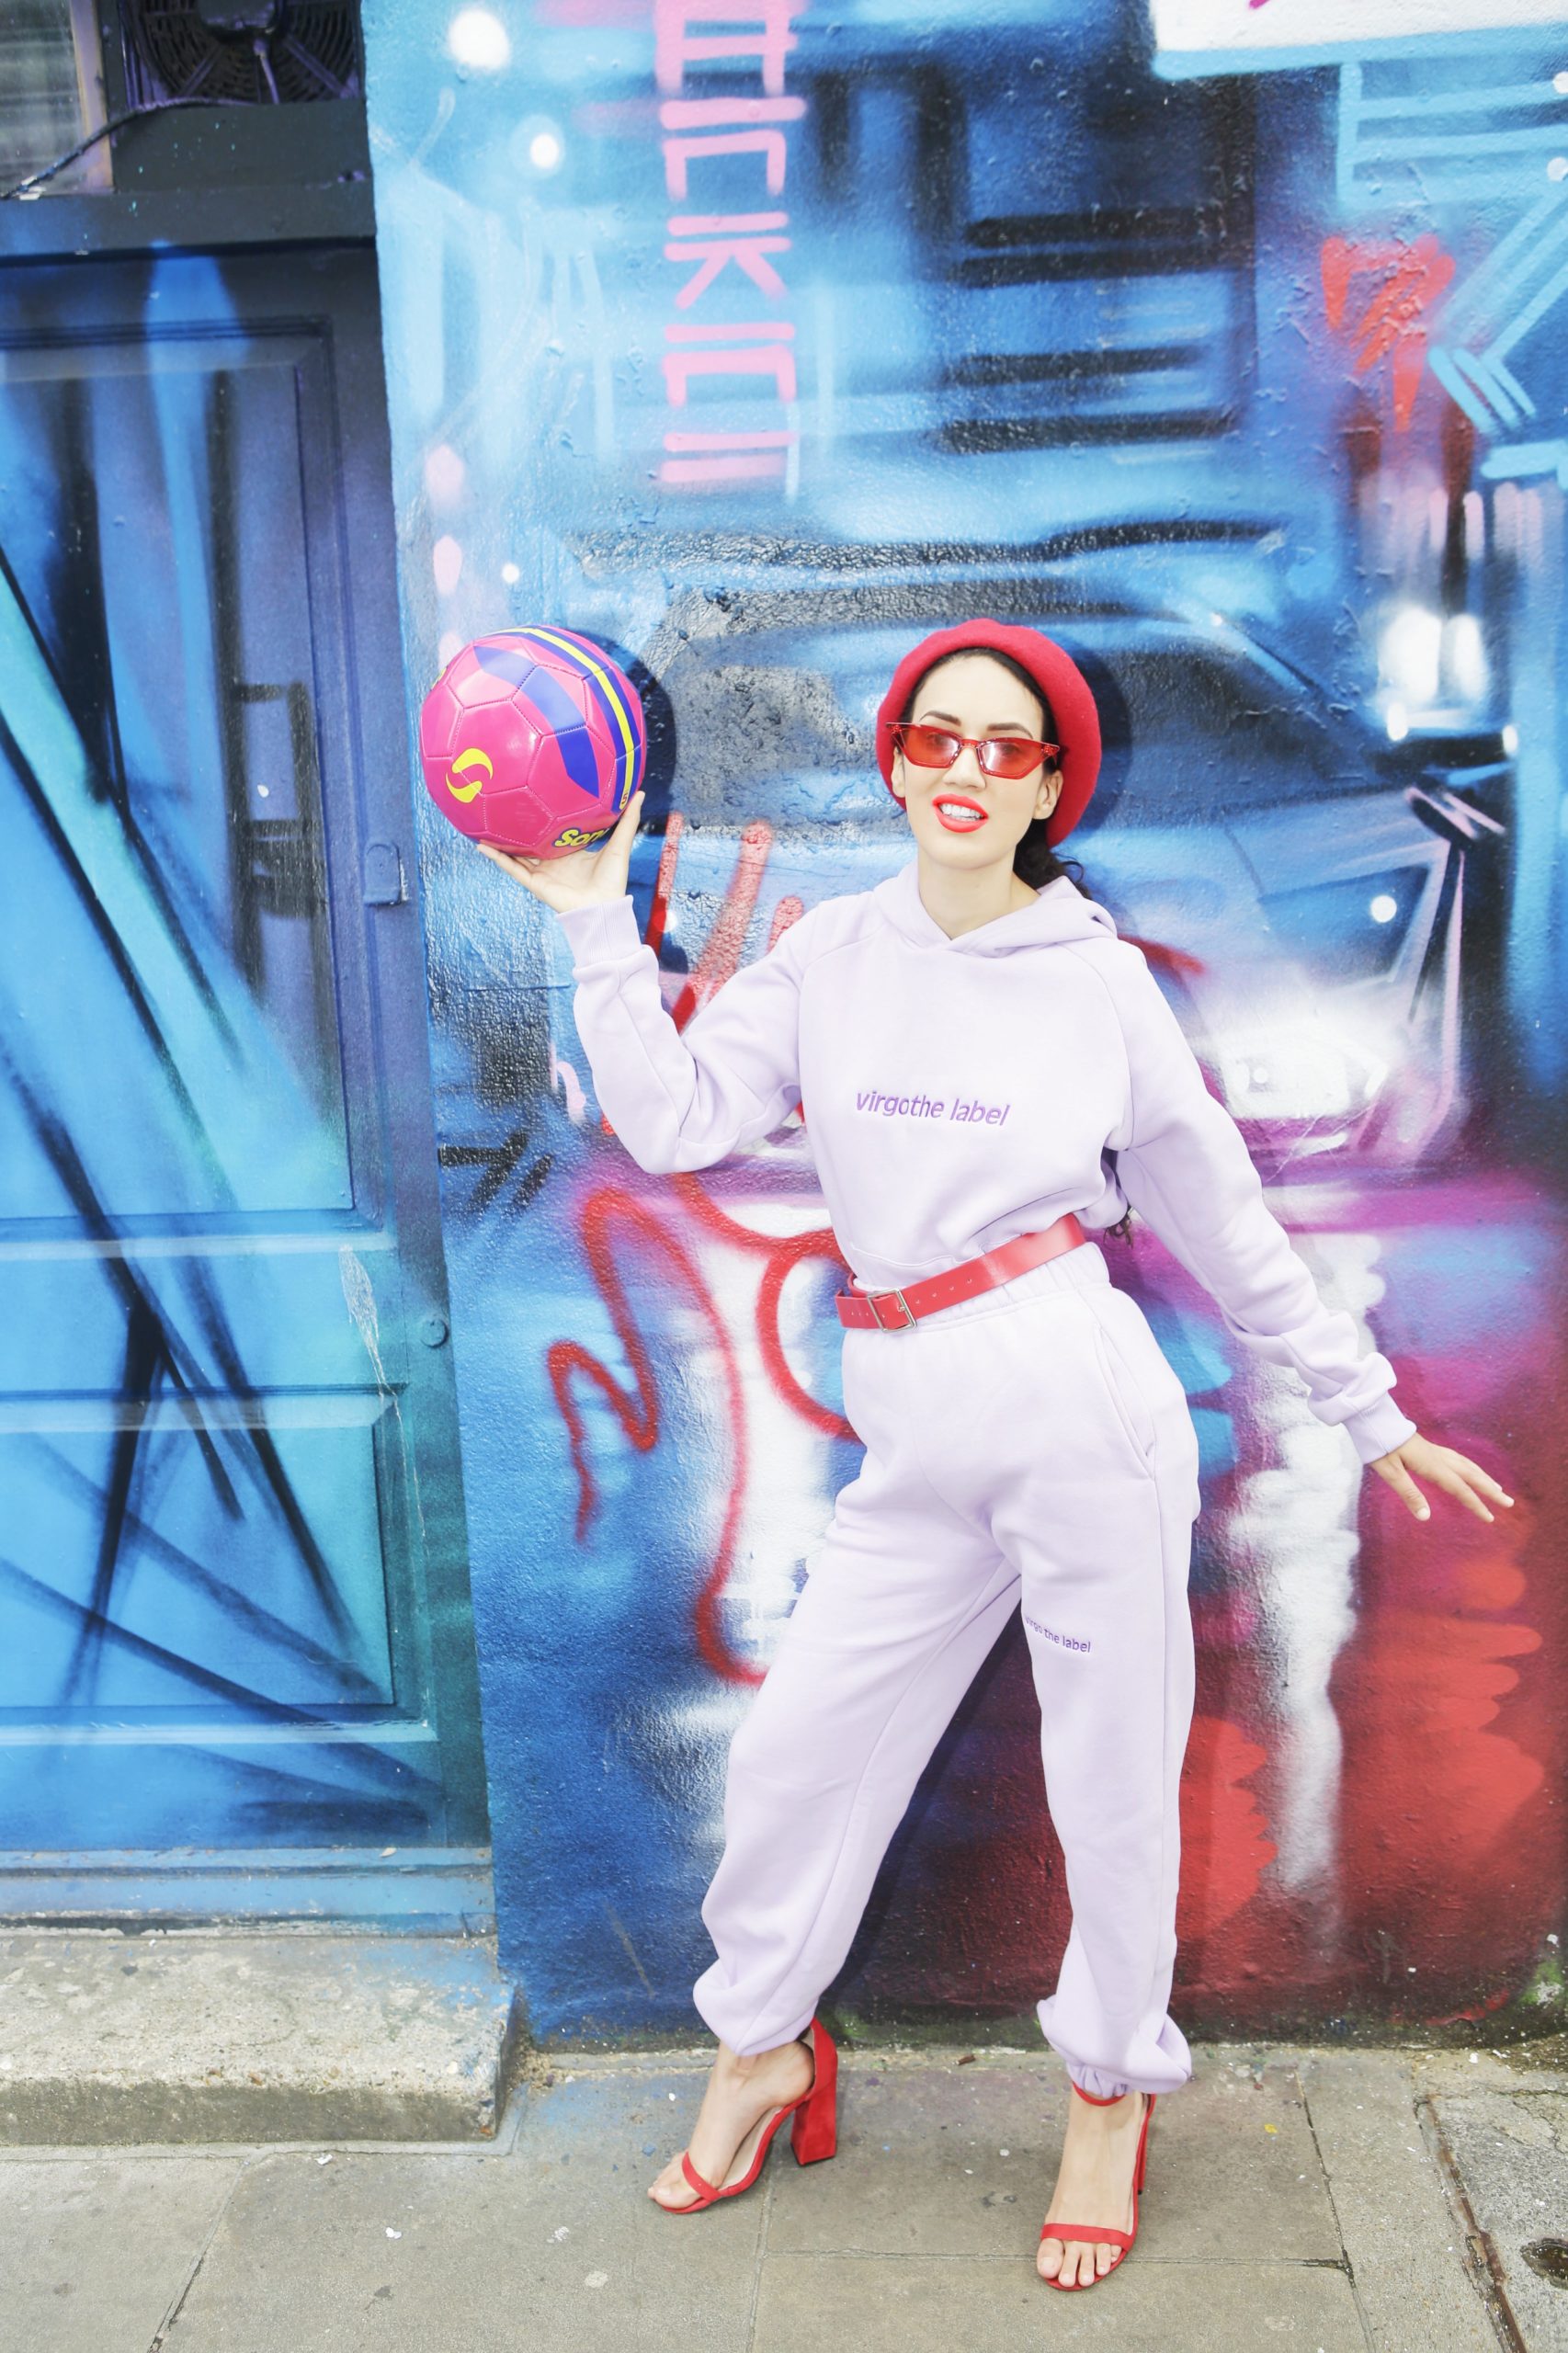 <img src="ana.jpg" alt="ana holding pink football against street art"/> 